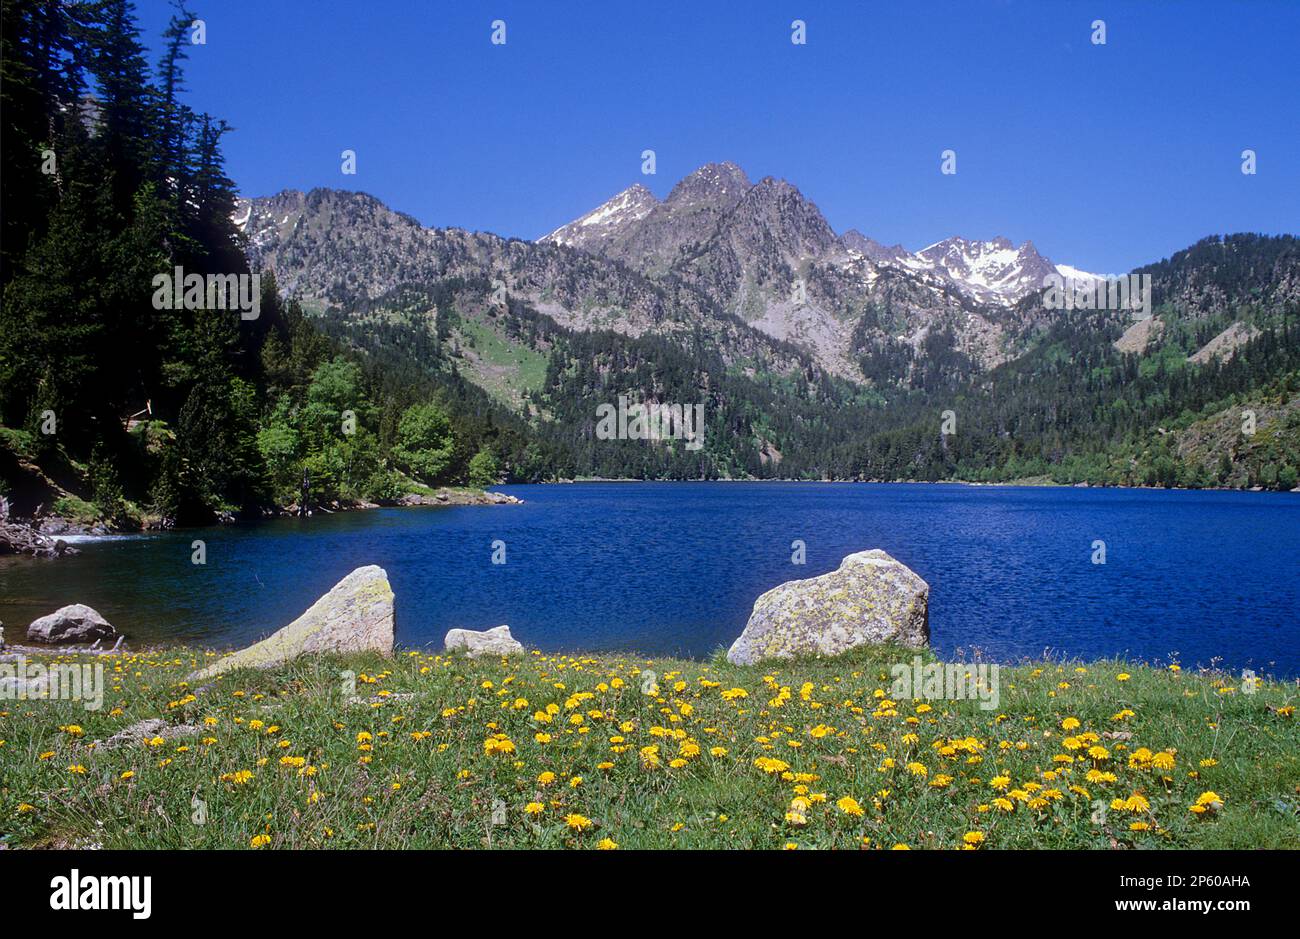 `Estany de Sant Maurici´Sant Maurici lake, Aigüestortes i Estany de Sant Maurici National Park, Pyrenees, Lleida province, Catalonia, Spain. Stock Photo